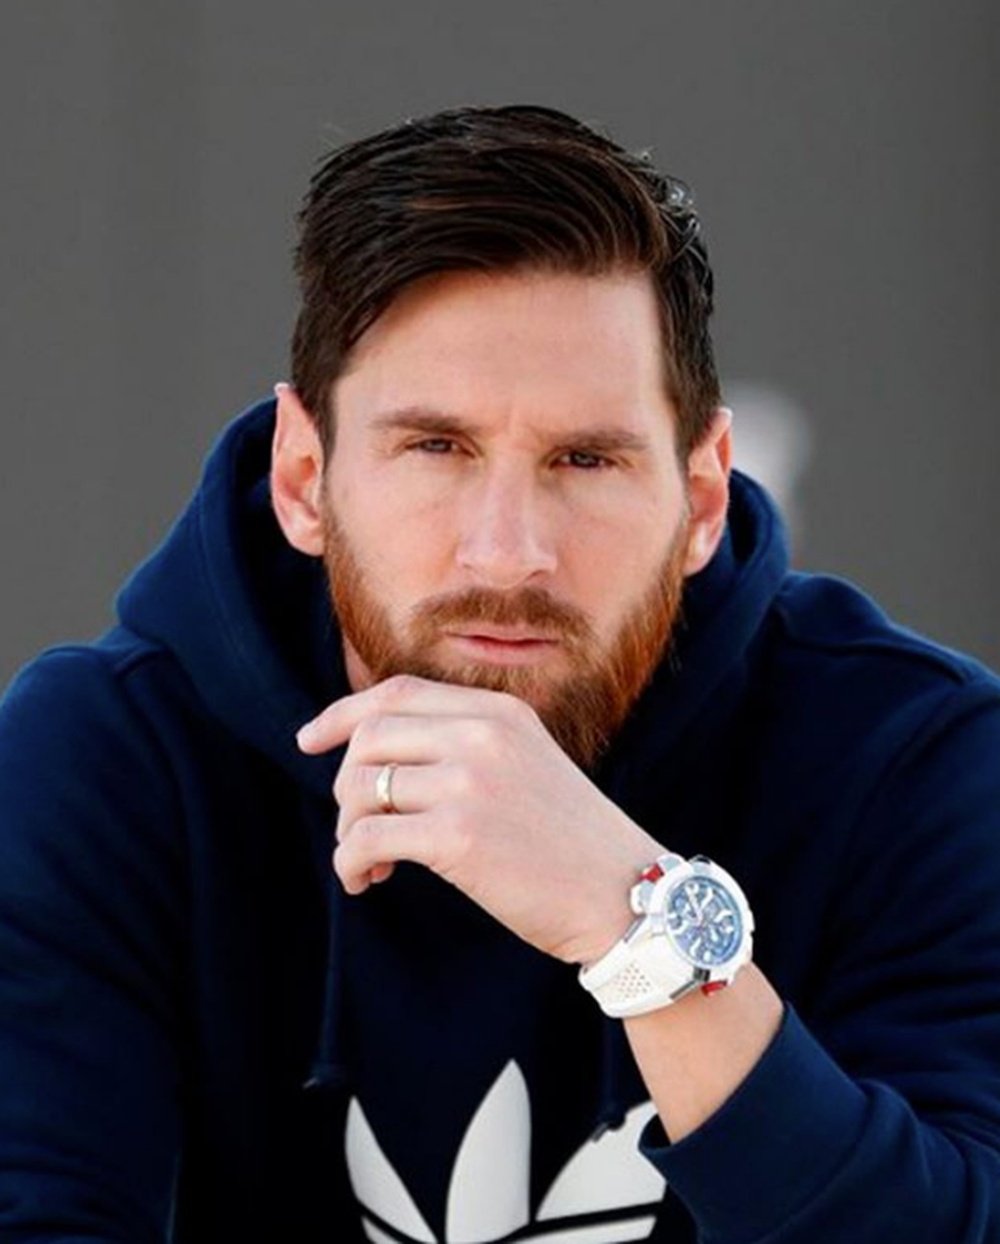 Messi garoto propaganda de uma marca de luxo. Instagram